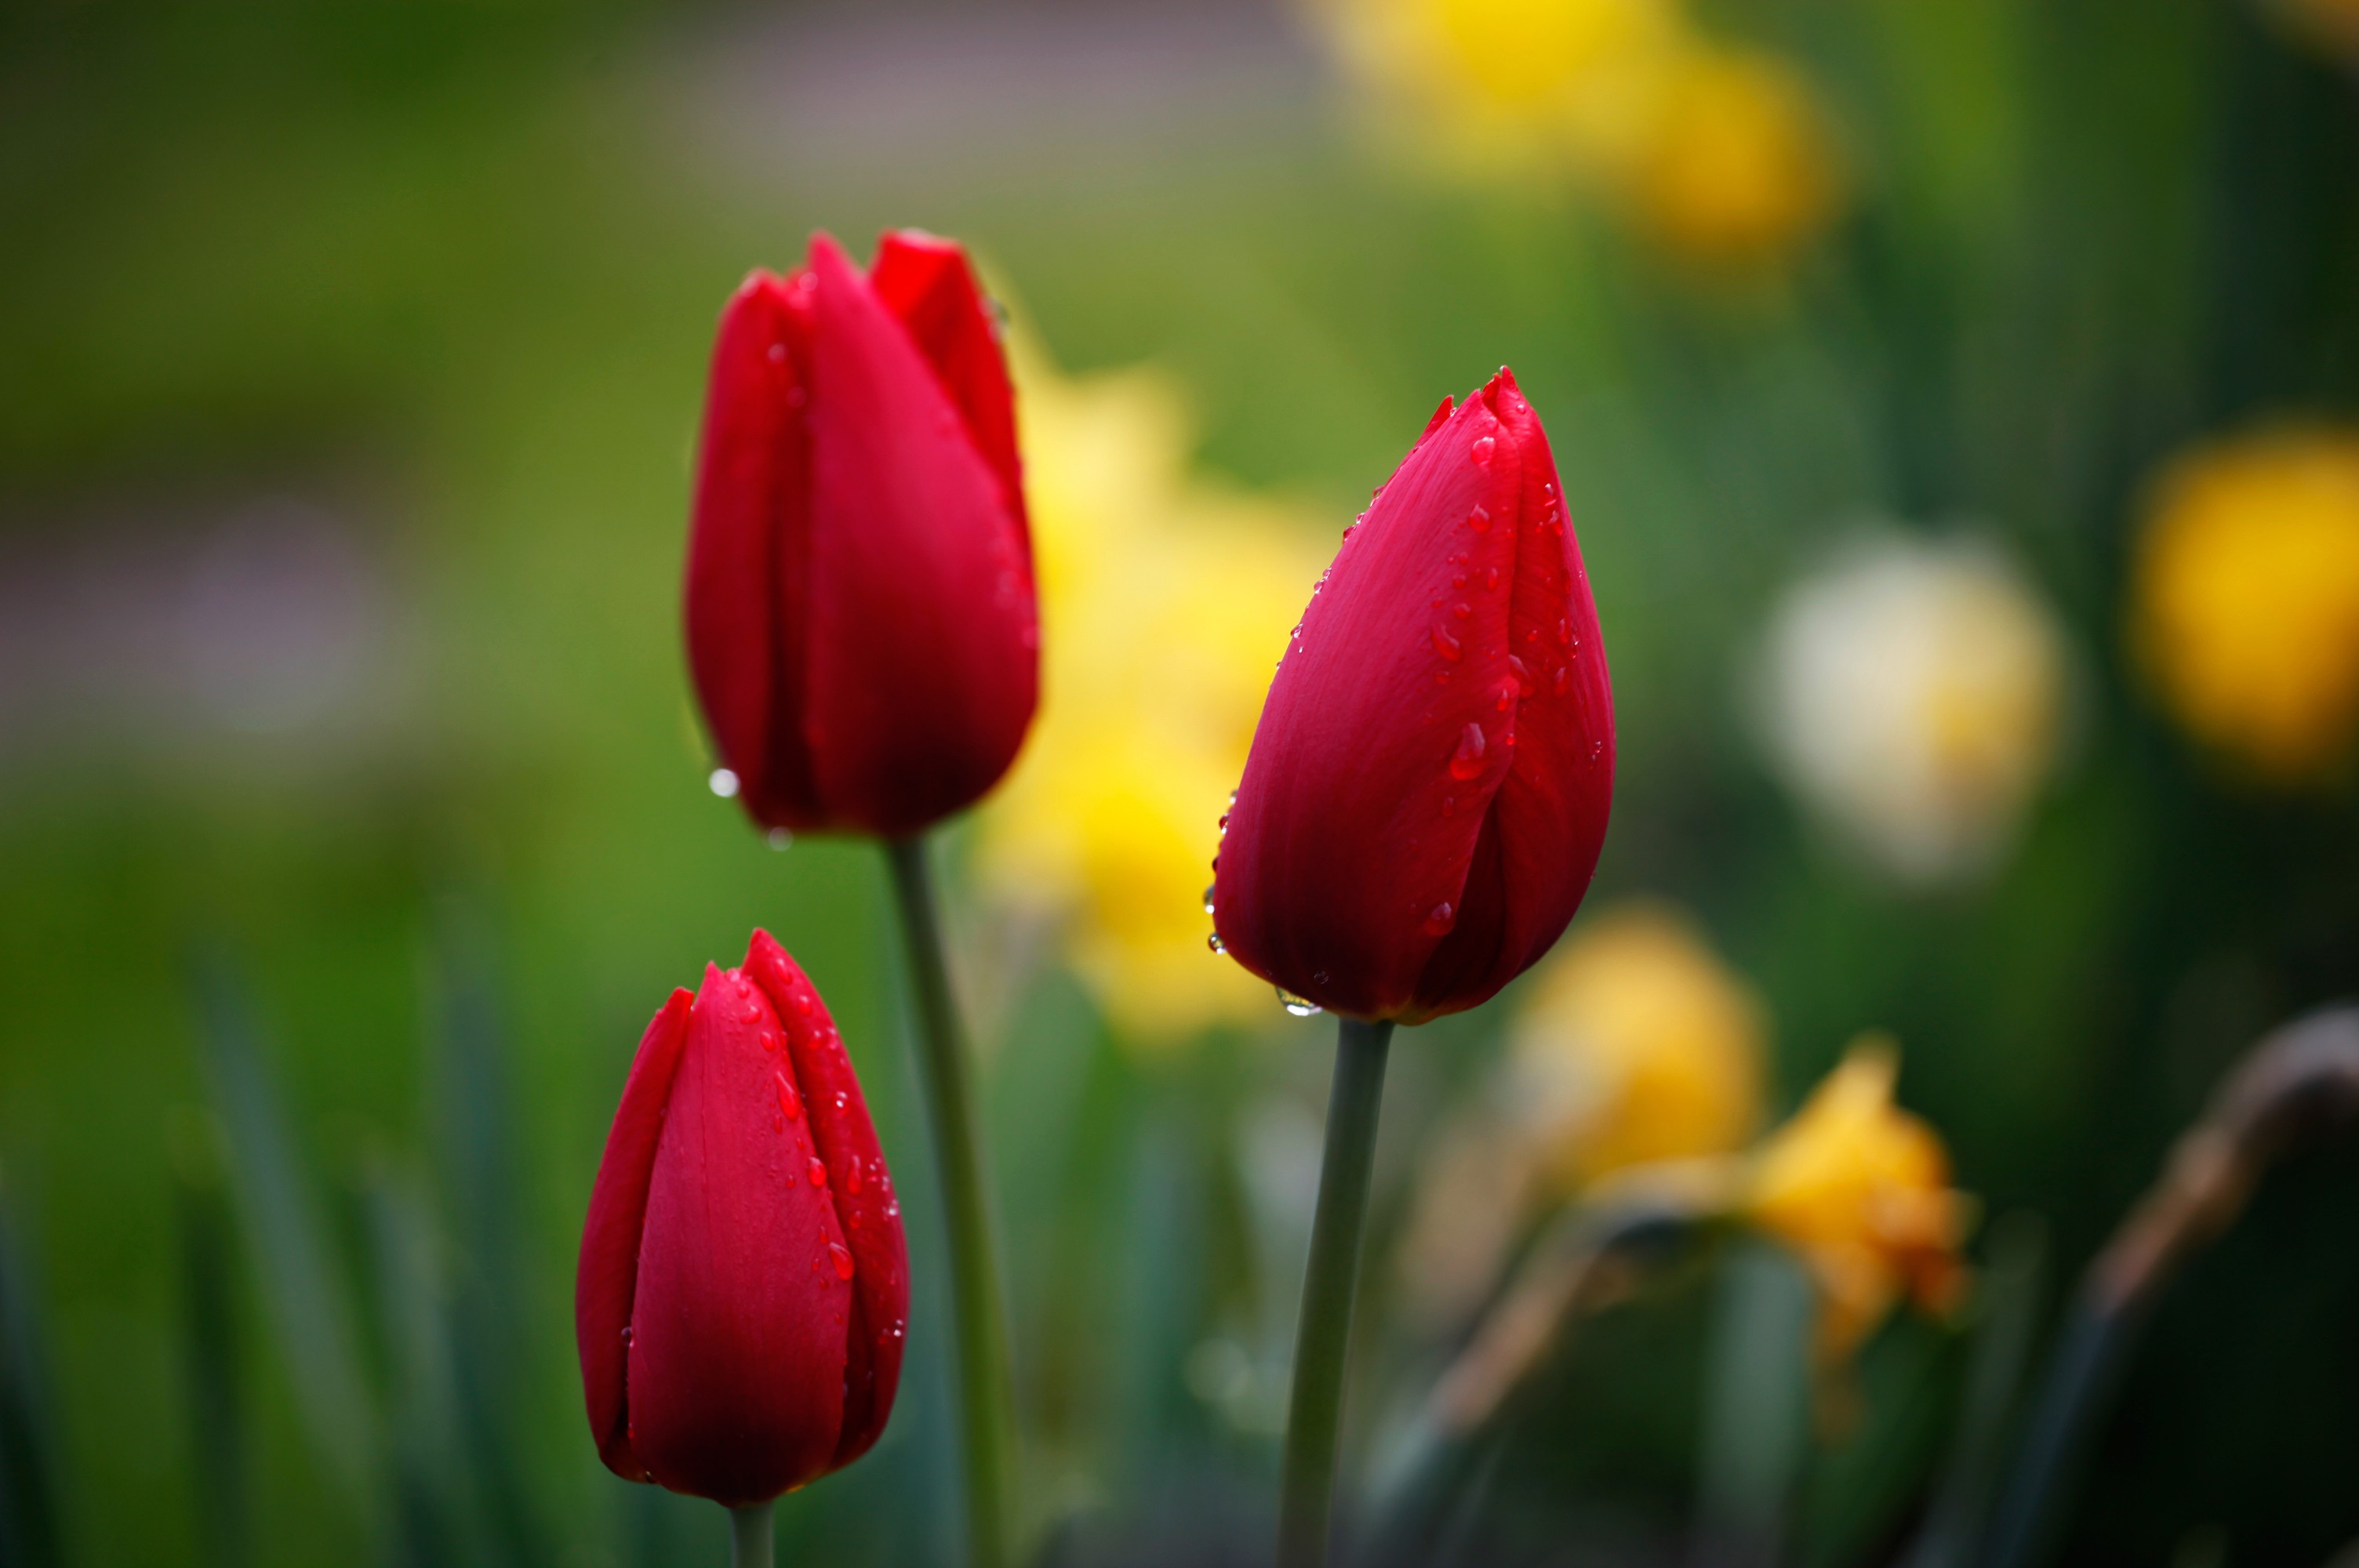 Kashmir Tulips - Countryside Kashmir